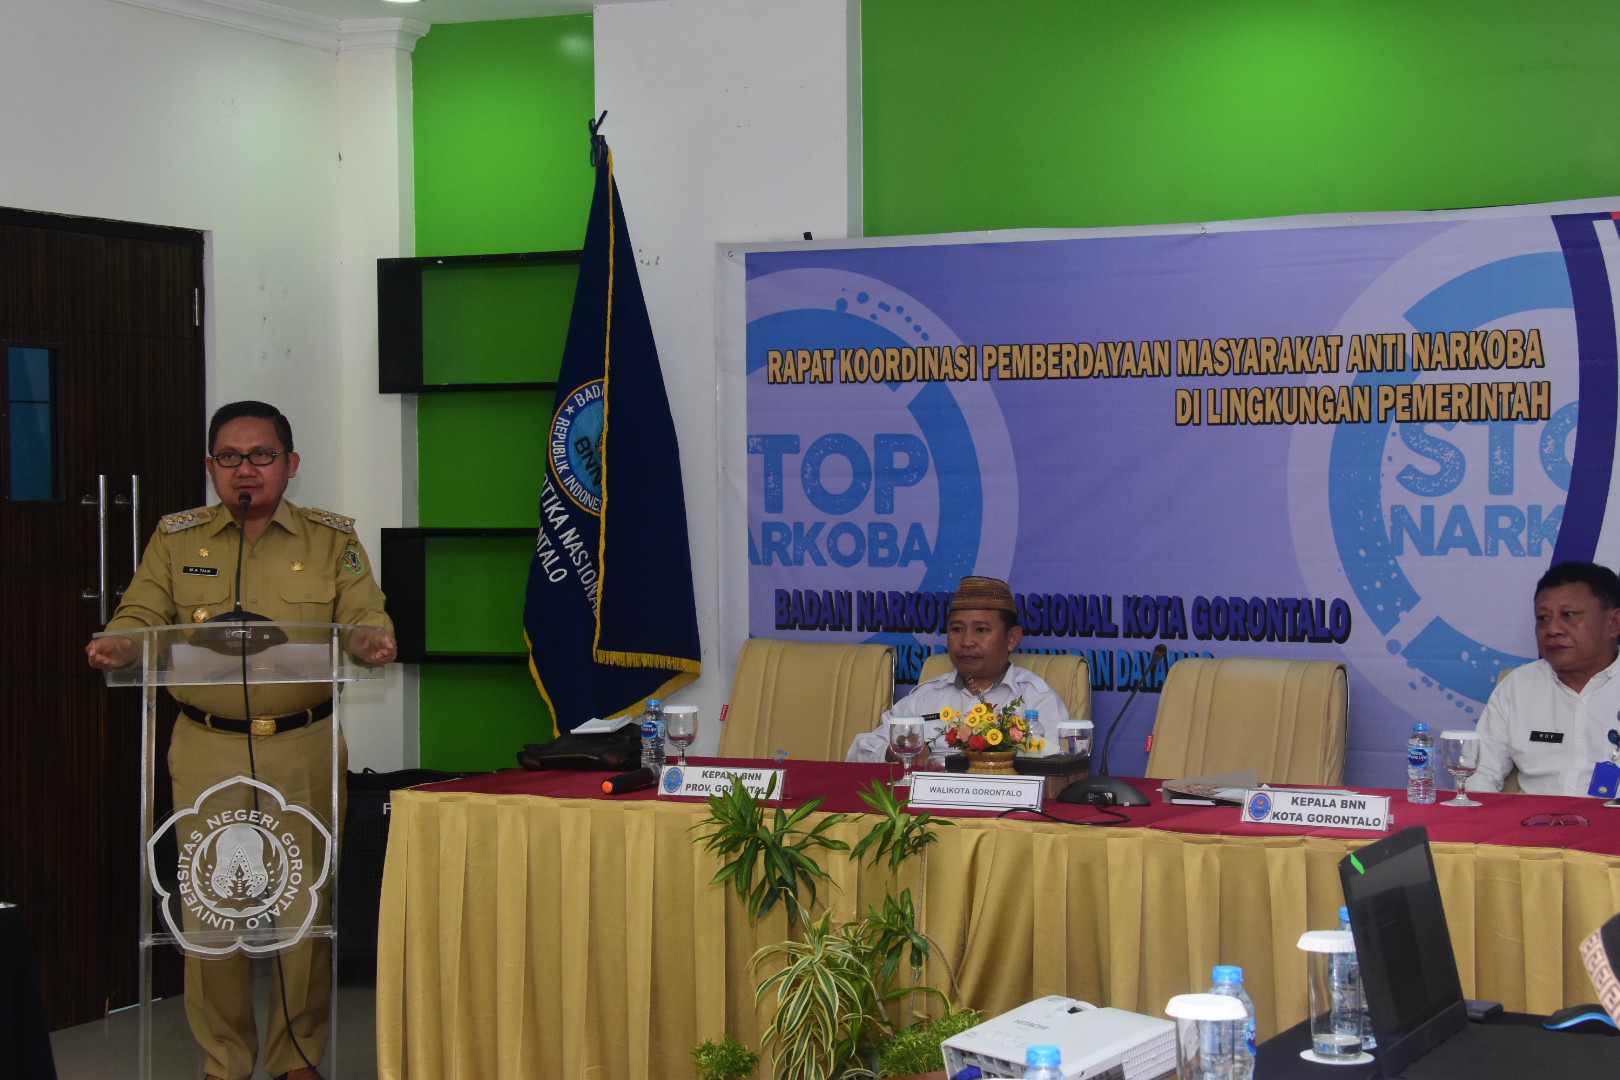 98 Orang di Kota Gorontalo Positif Pengguna Narkoba